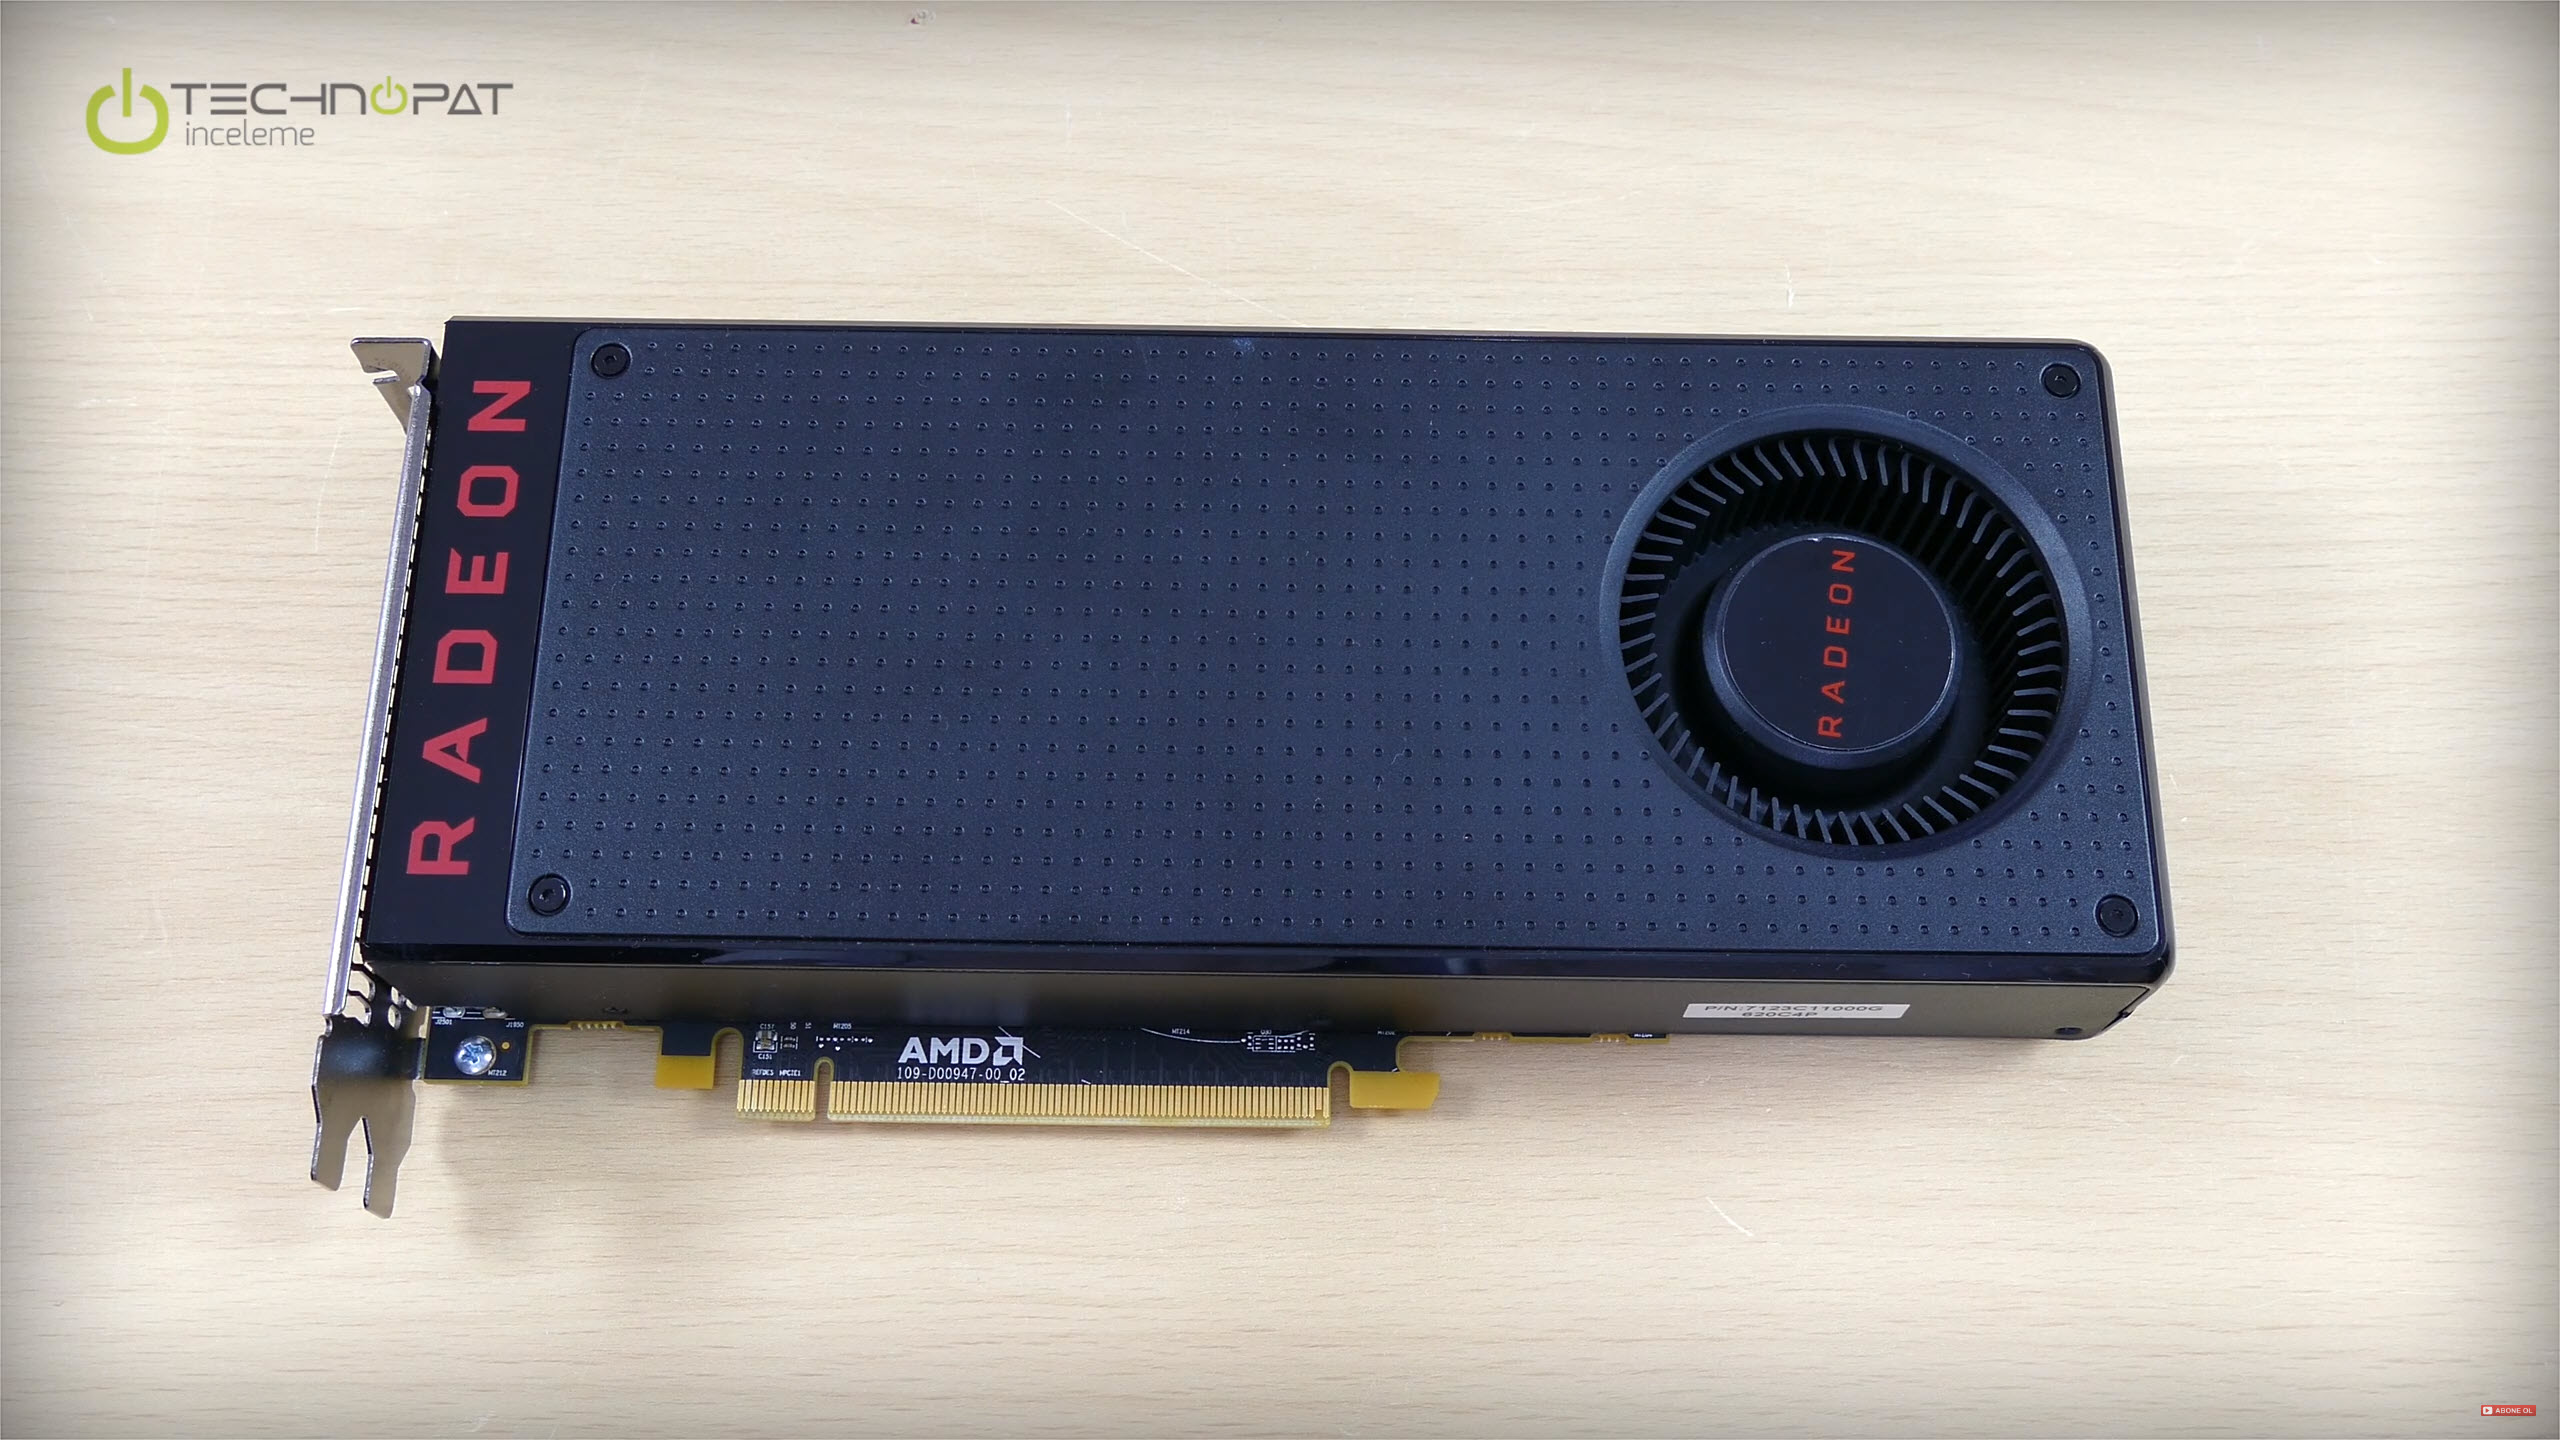 AMD Radeon Rx 480 8 GB Ekran Kartı İncelemesi - Technopat